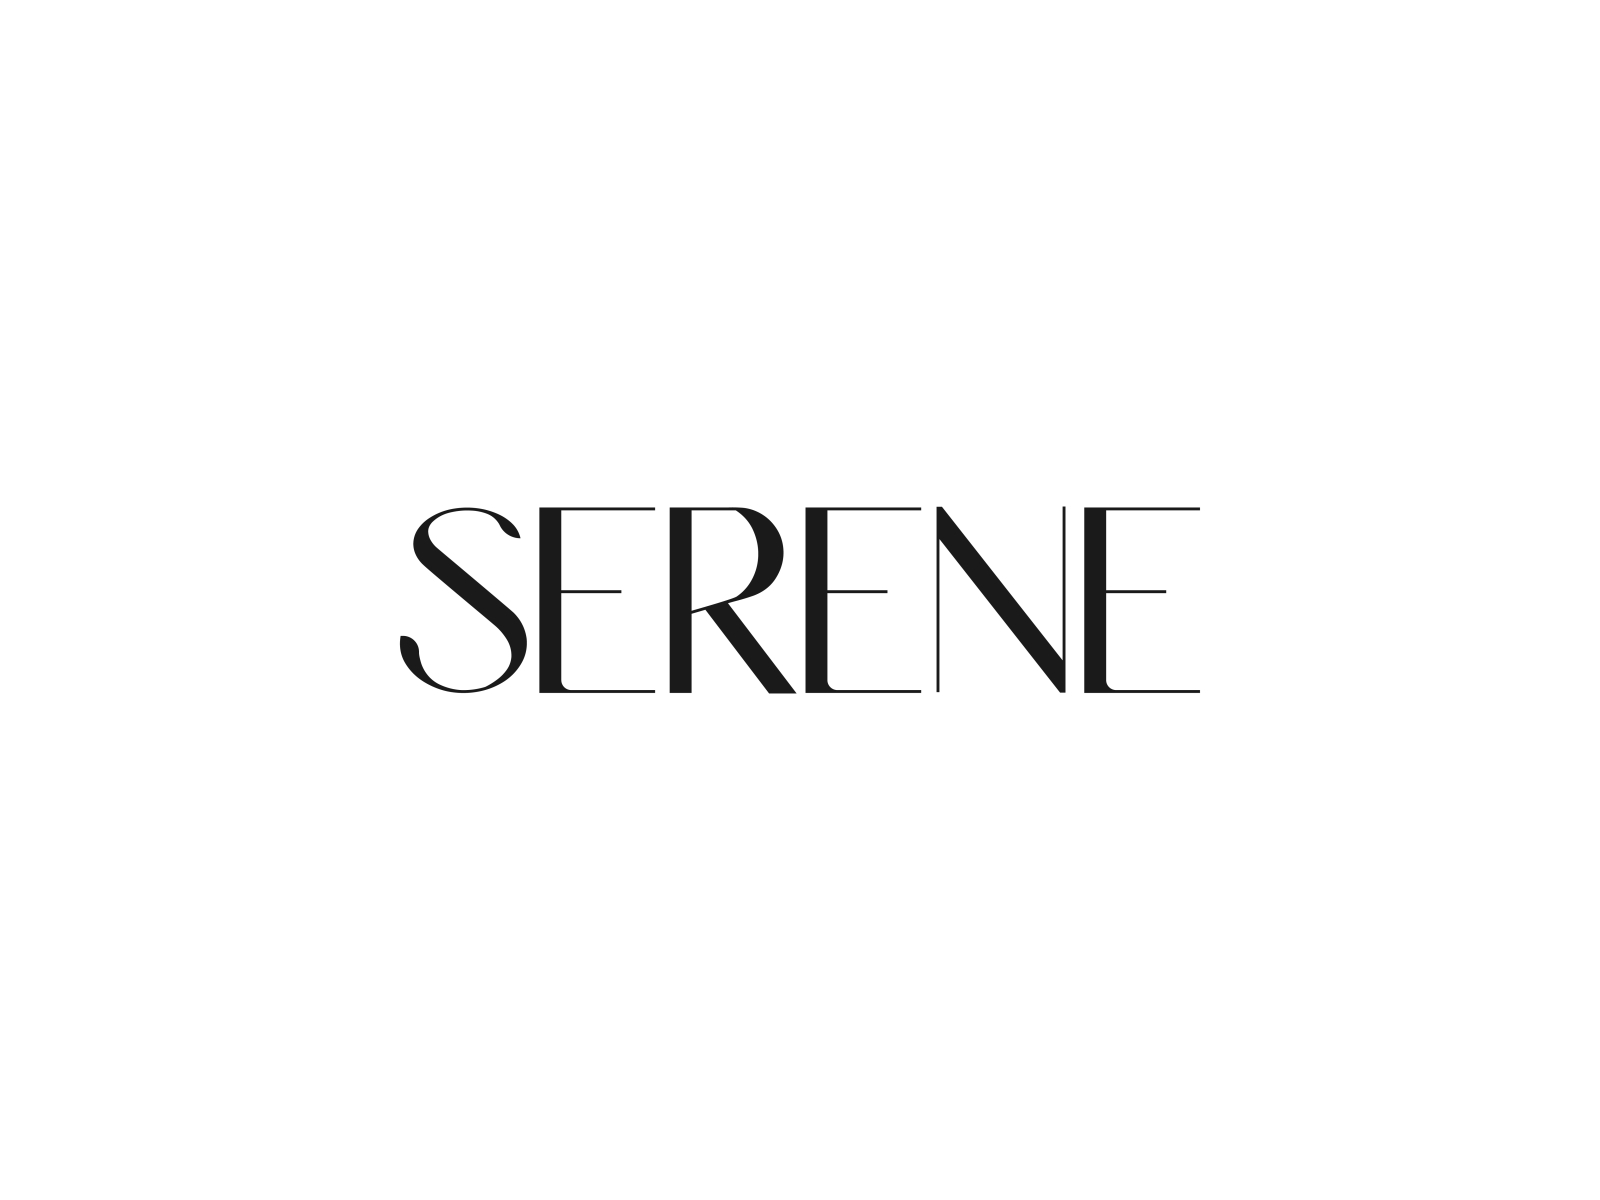 Serene Logo by Fozley Rabbi 🚀 on Dribbble